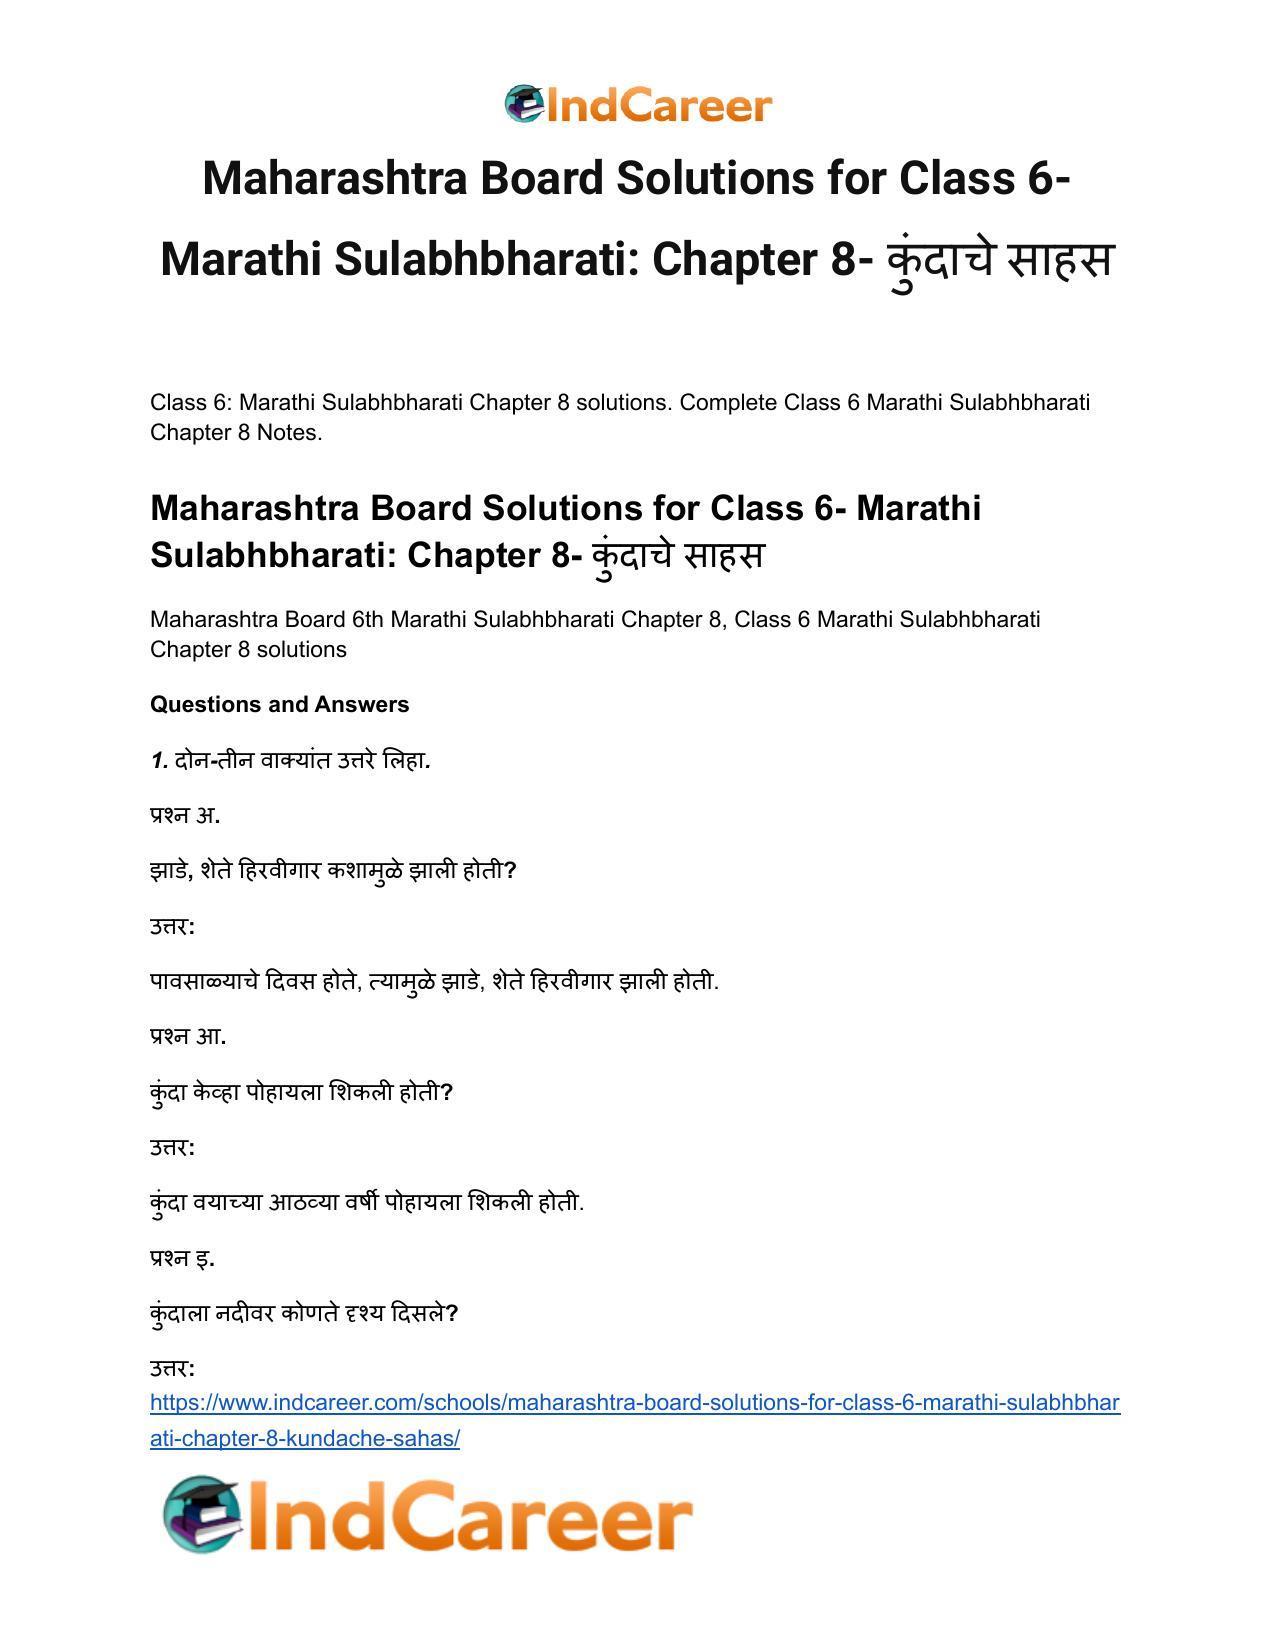 Maharashtra Board Solutions for Class 6- Marathi Sulabhbharati: Chapter 8- कुंदाचे साहस - Page 2